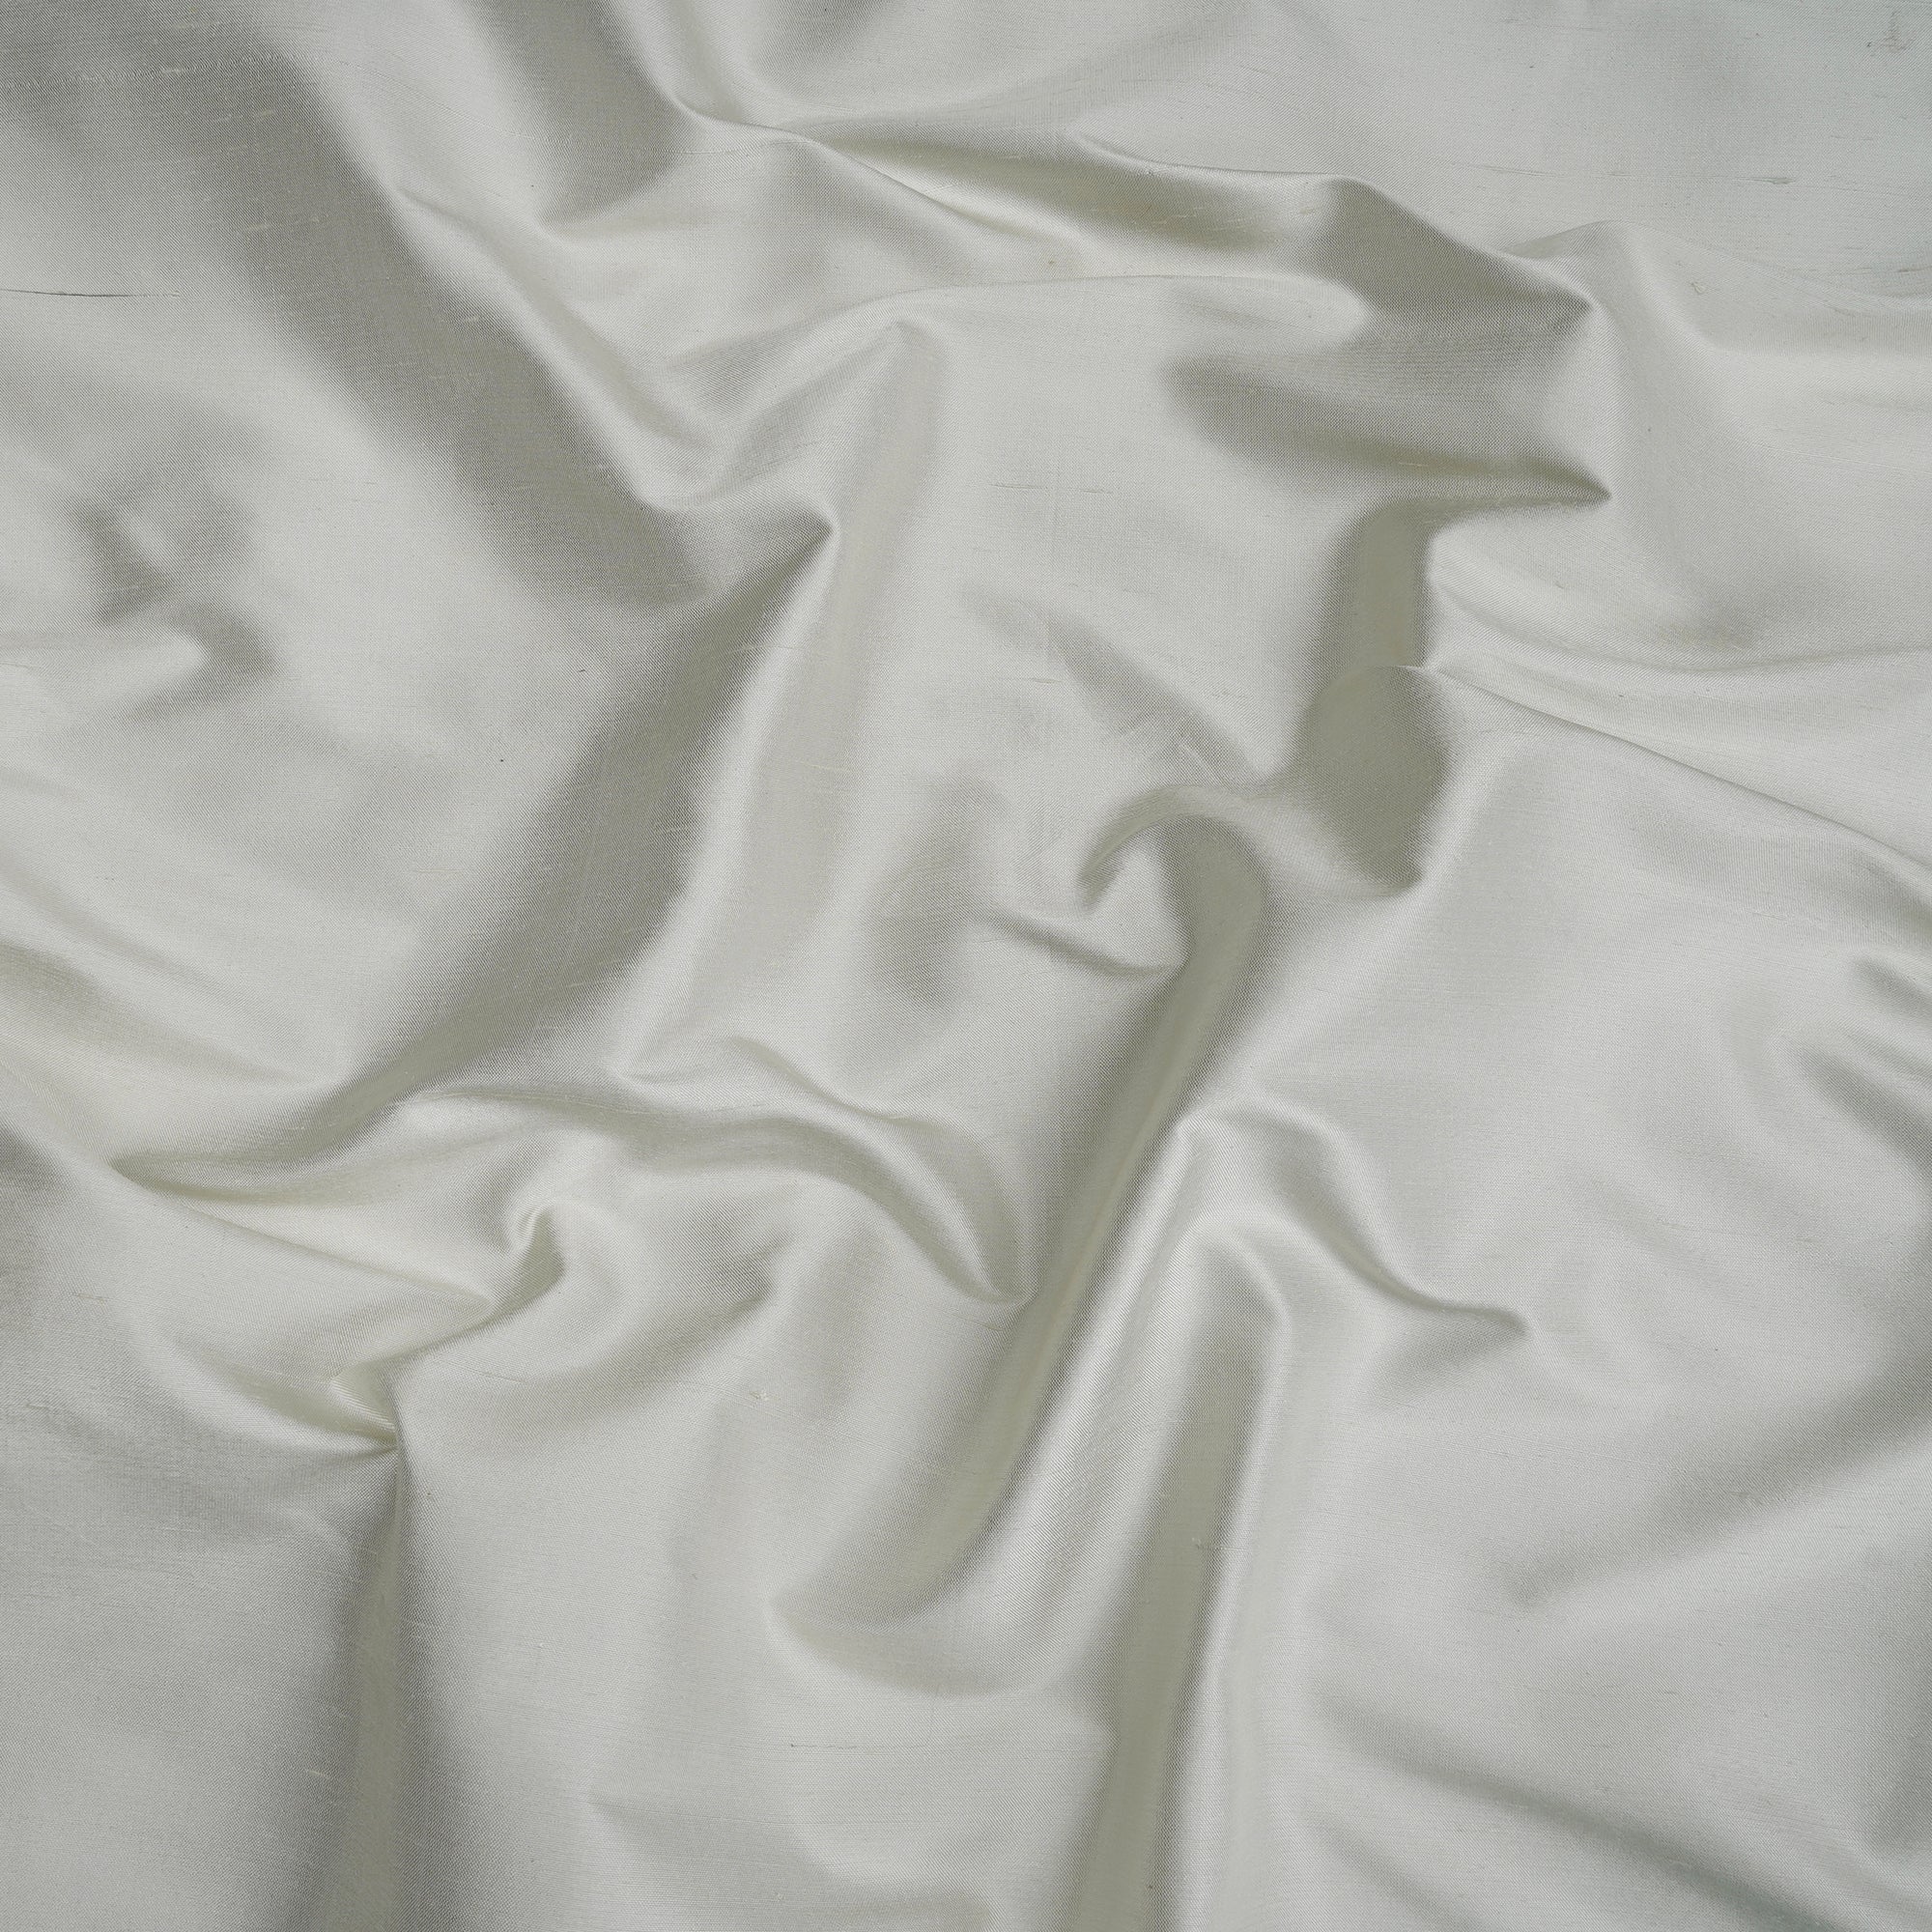 Mint Cream Color Dupion Silk Fabric